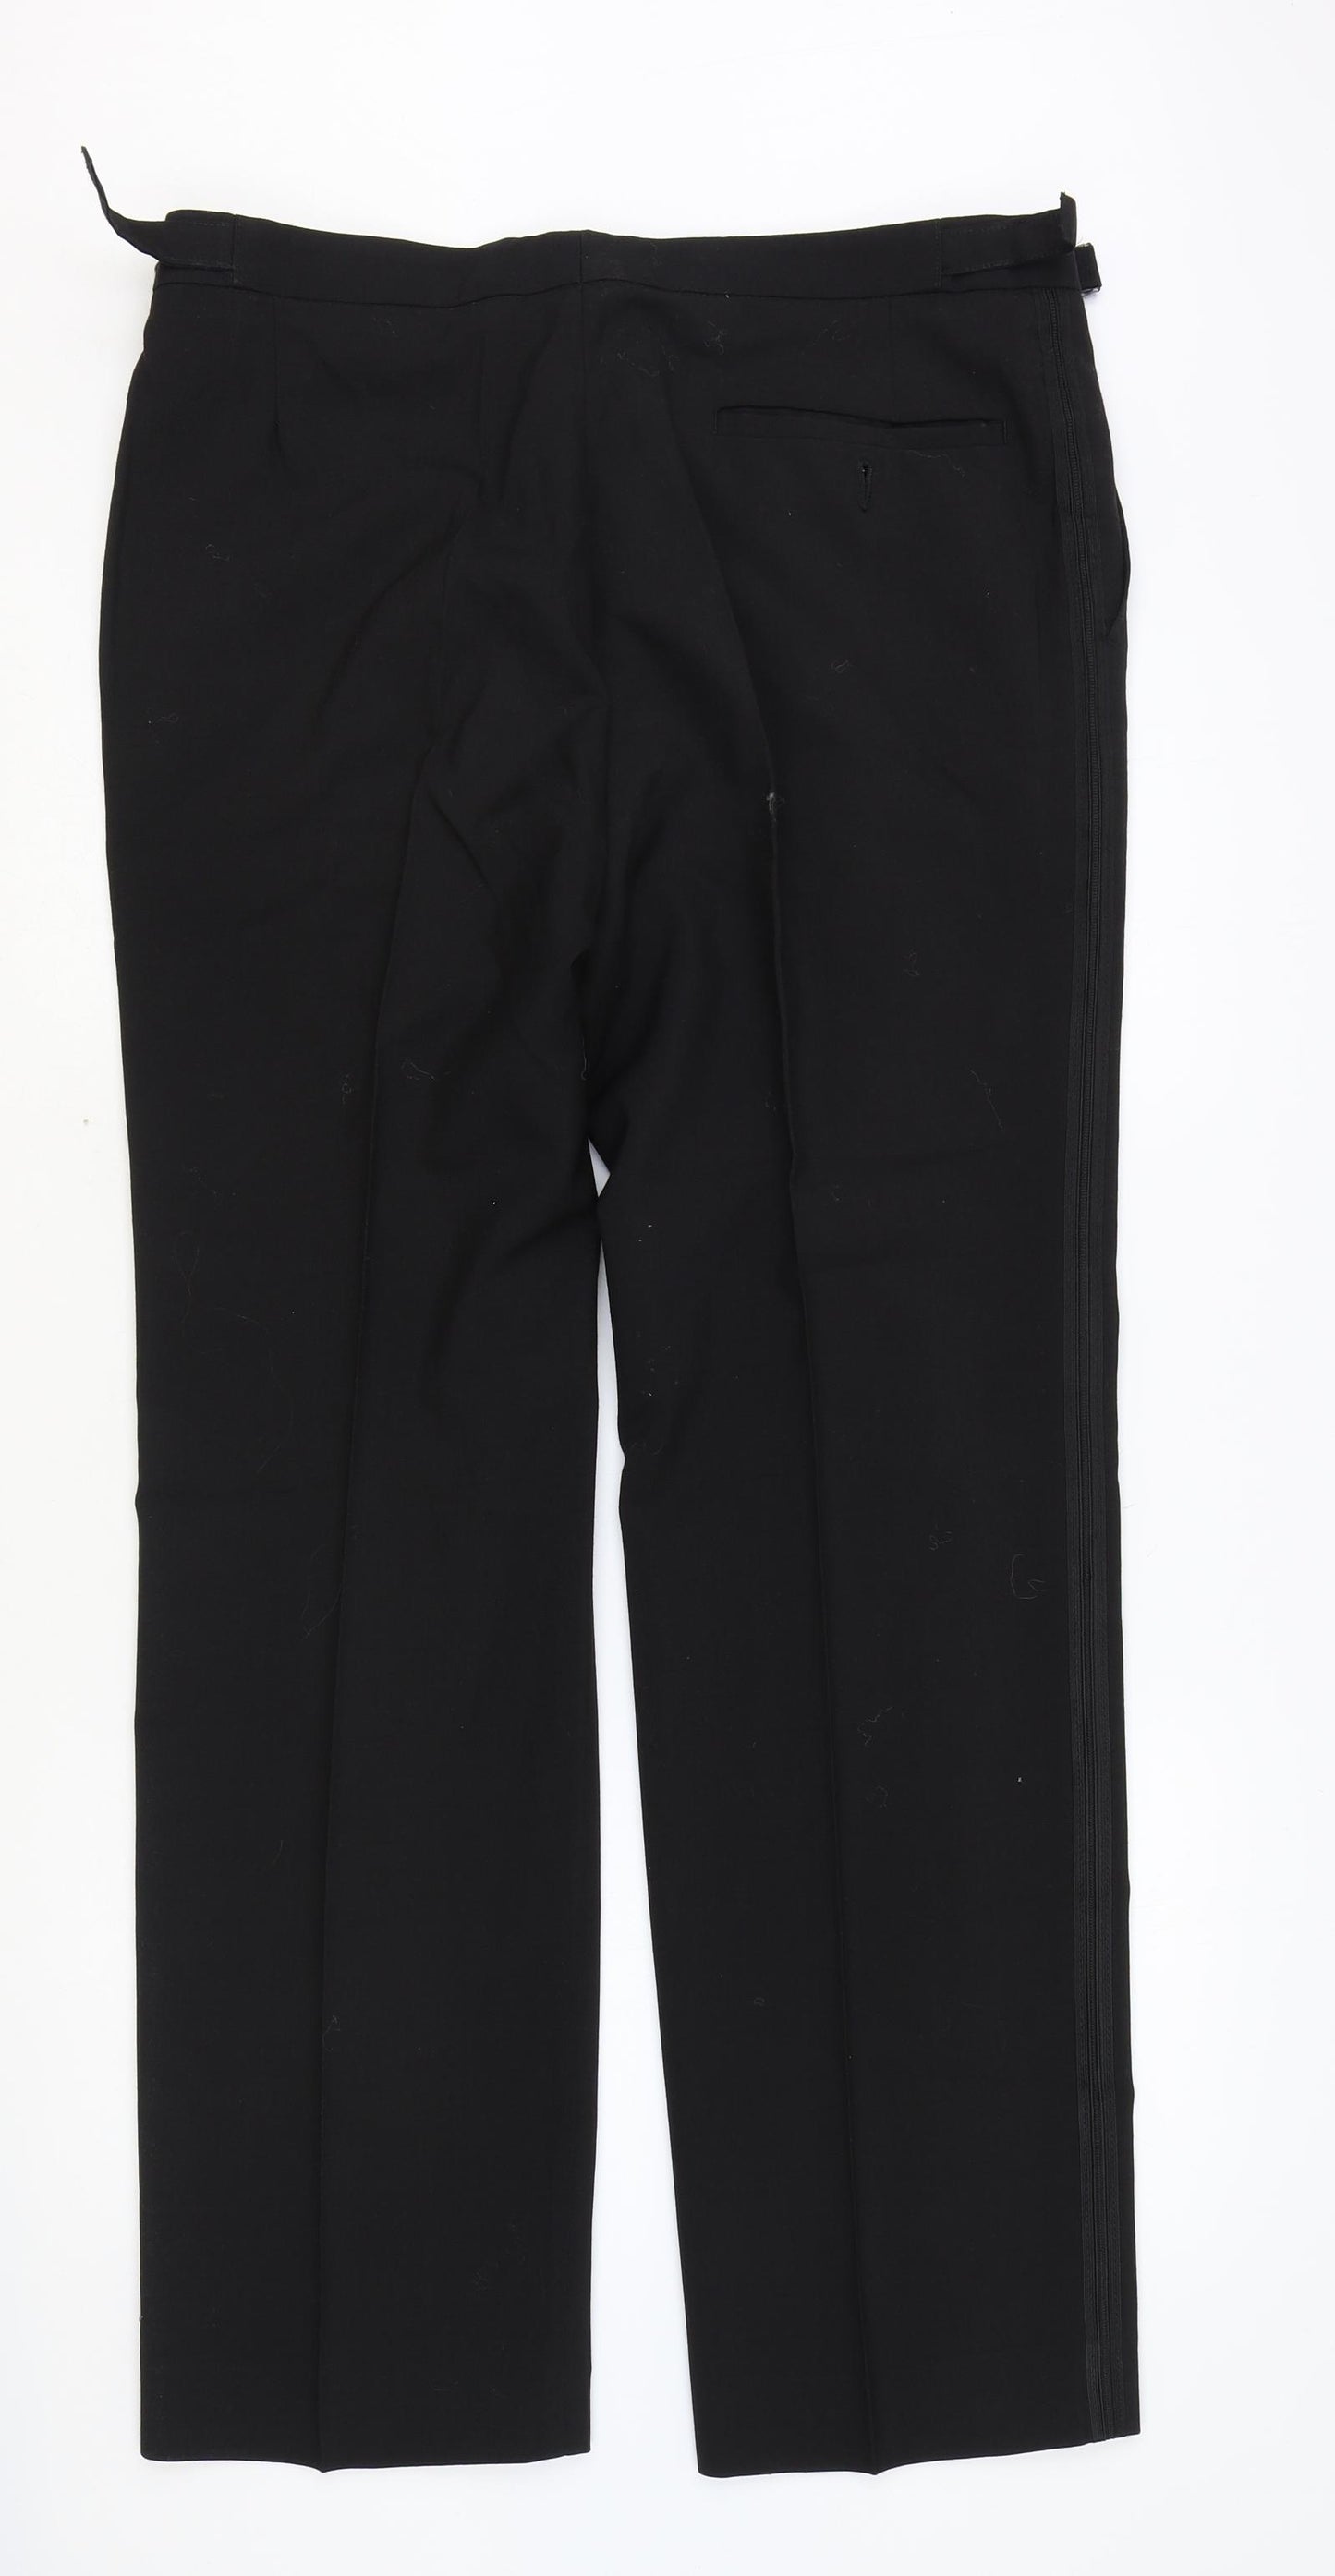 Preworn Mens Black Polyester Dress Pants Trousers Size 36 in Regular Zip